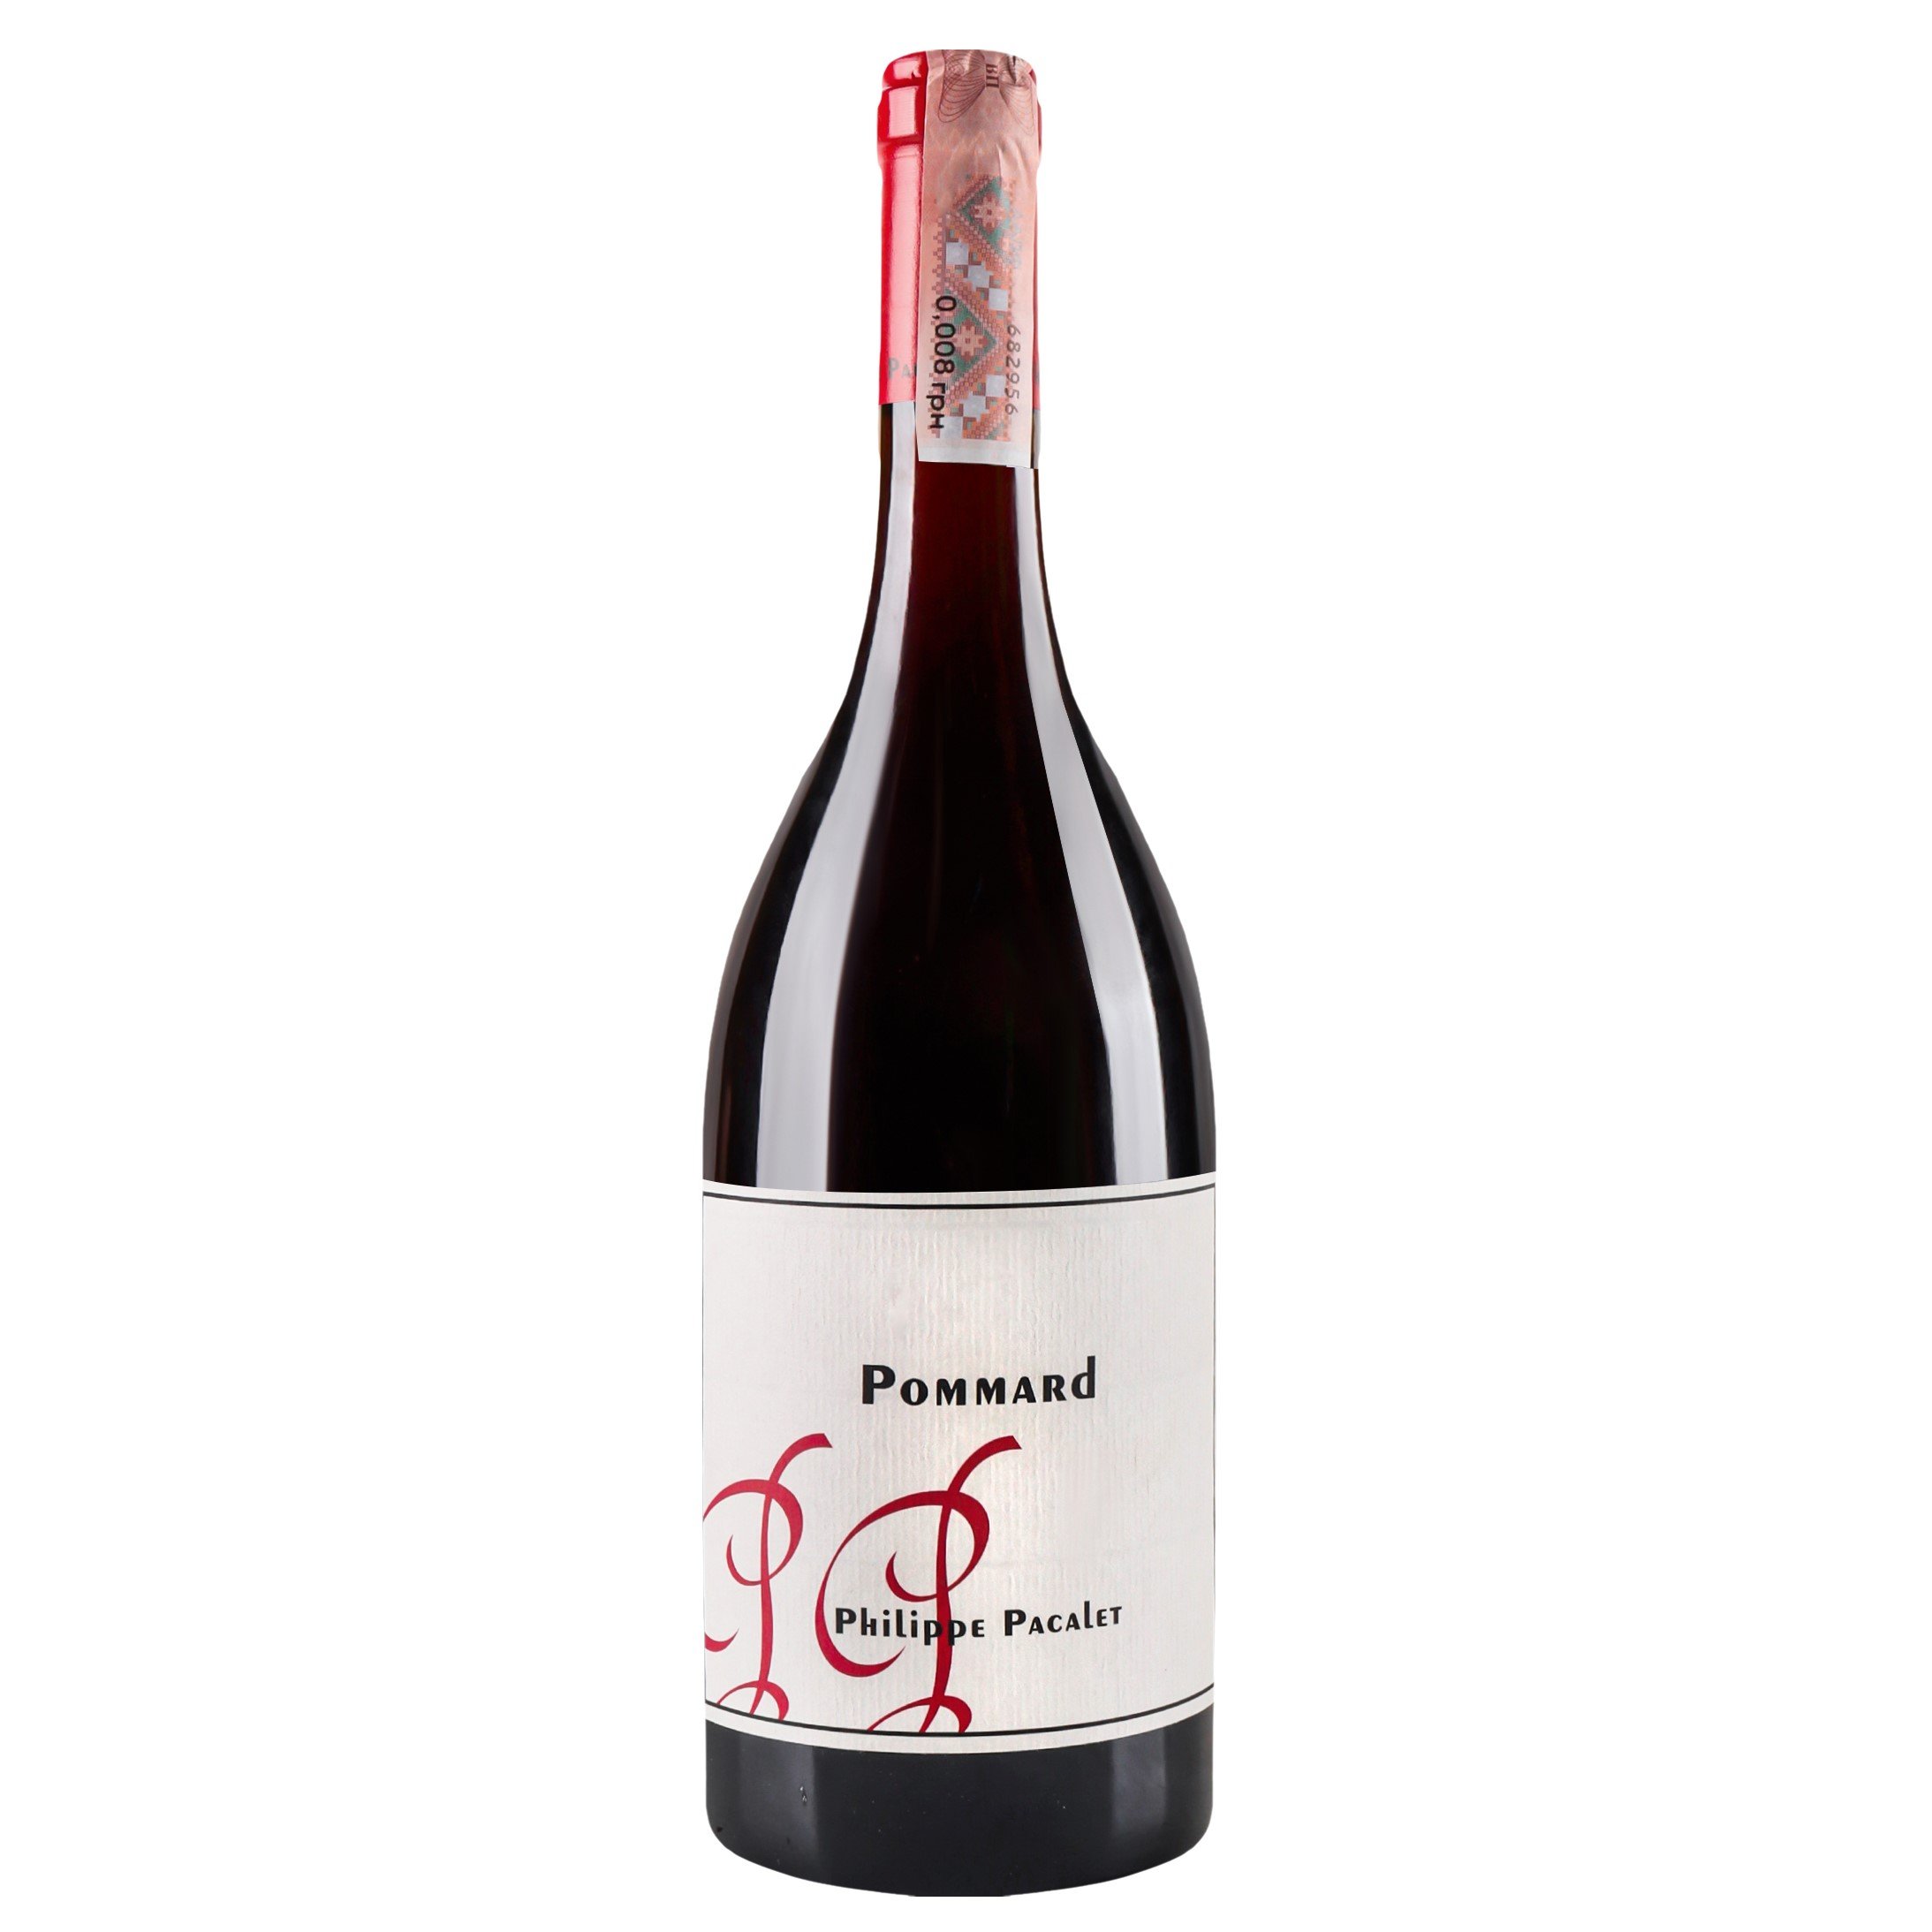 Вино Philippe Pacalet Pommard 2016 AOC/AOP, 12,5%, 0,75 л (801597) - фото 1